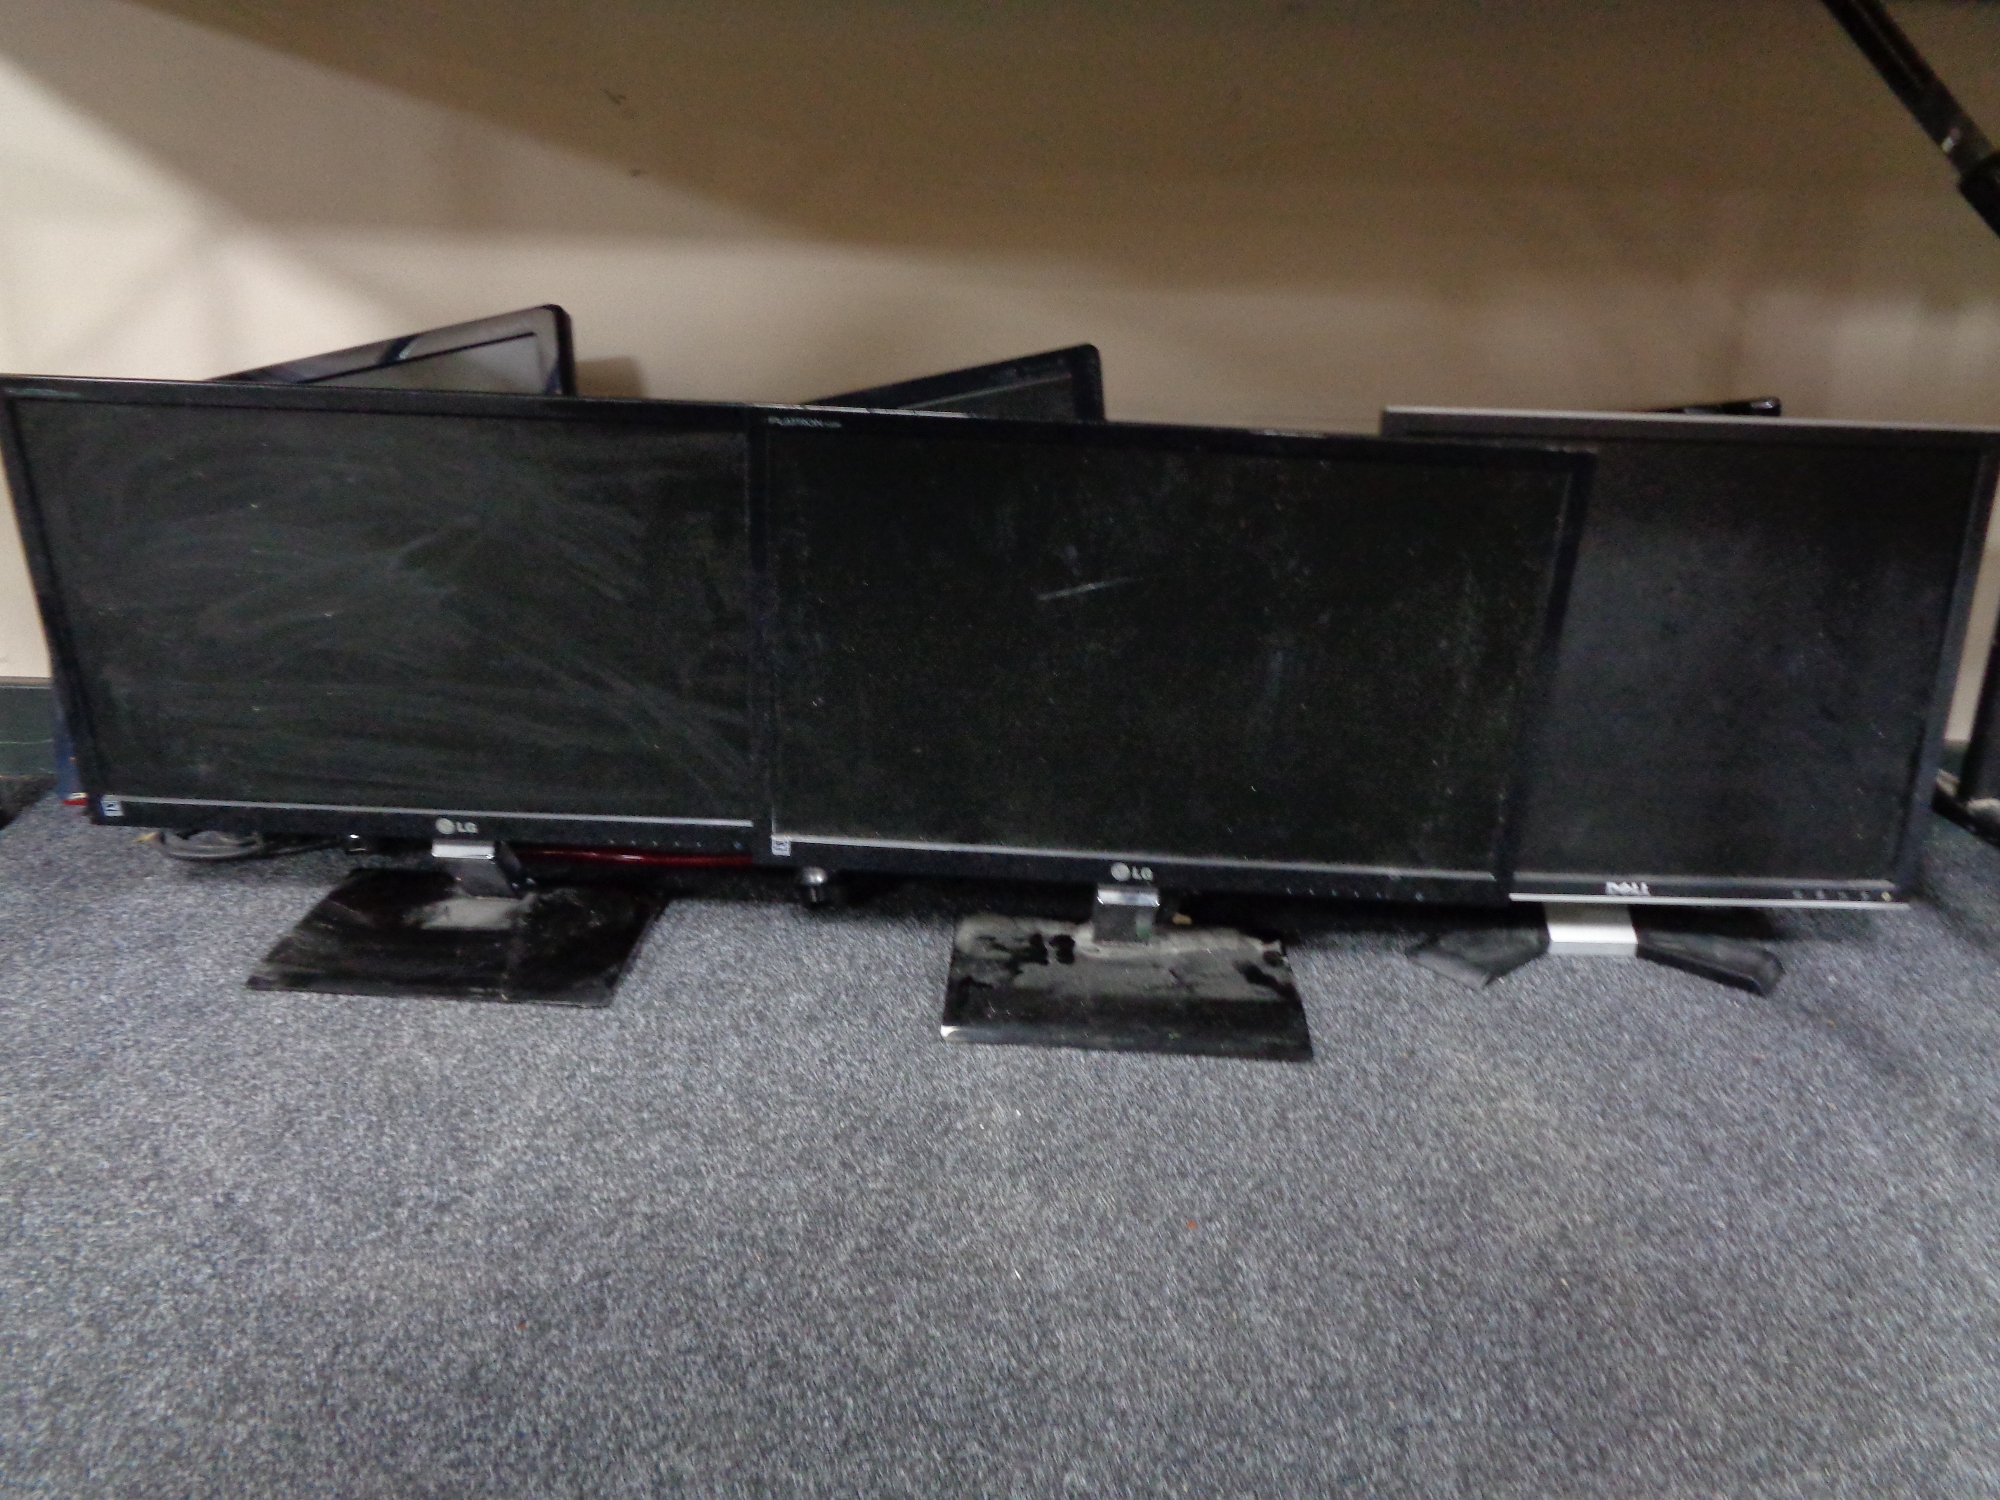 Three LG LCD TV monitors (no table stands), three further monitors, box of digital photo frame, - Image 2 of 3